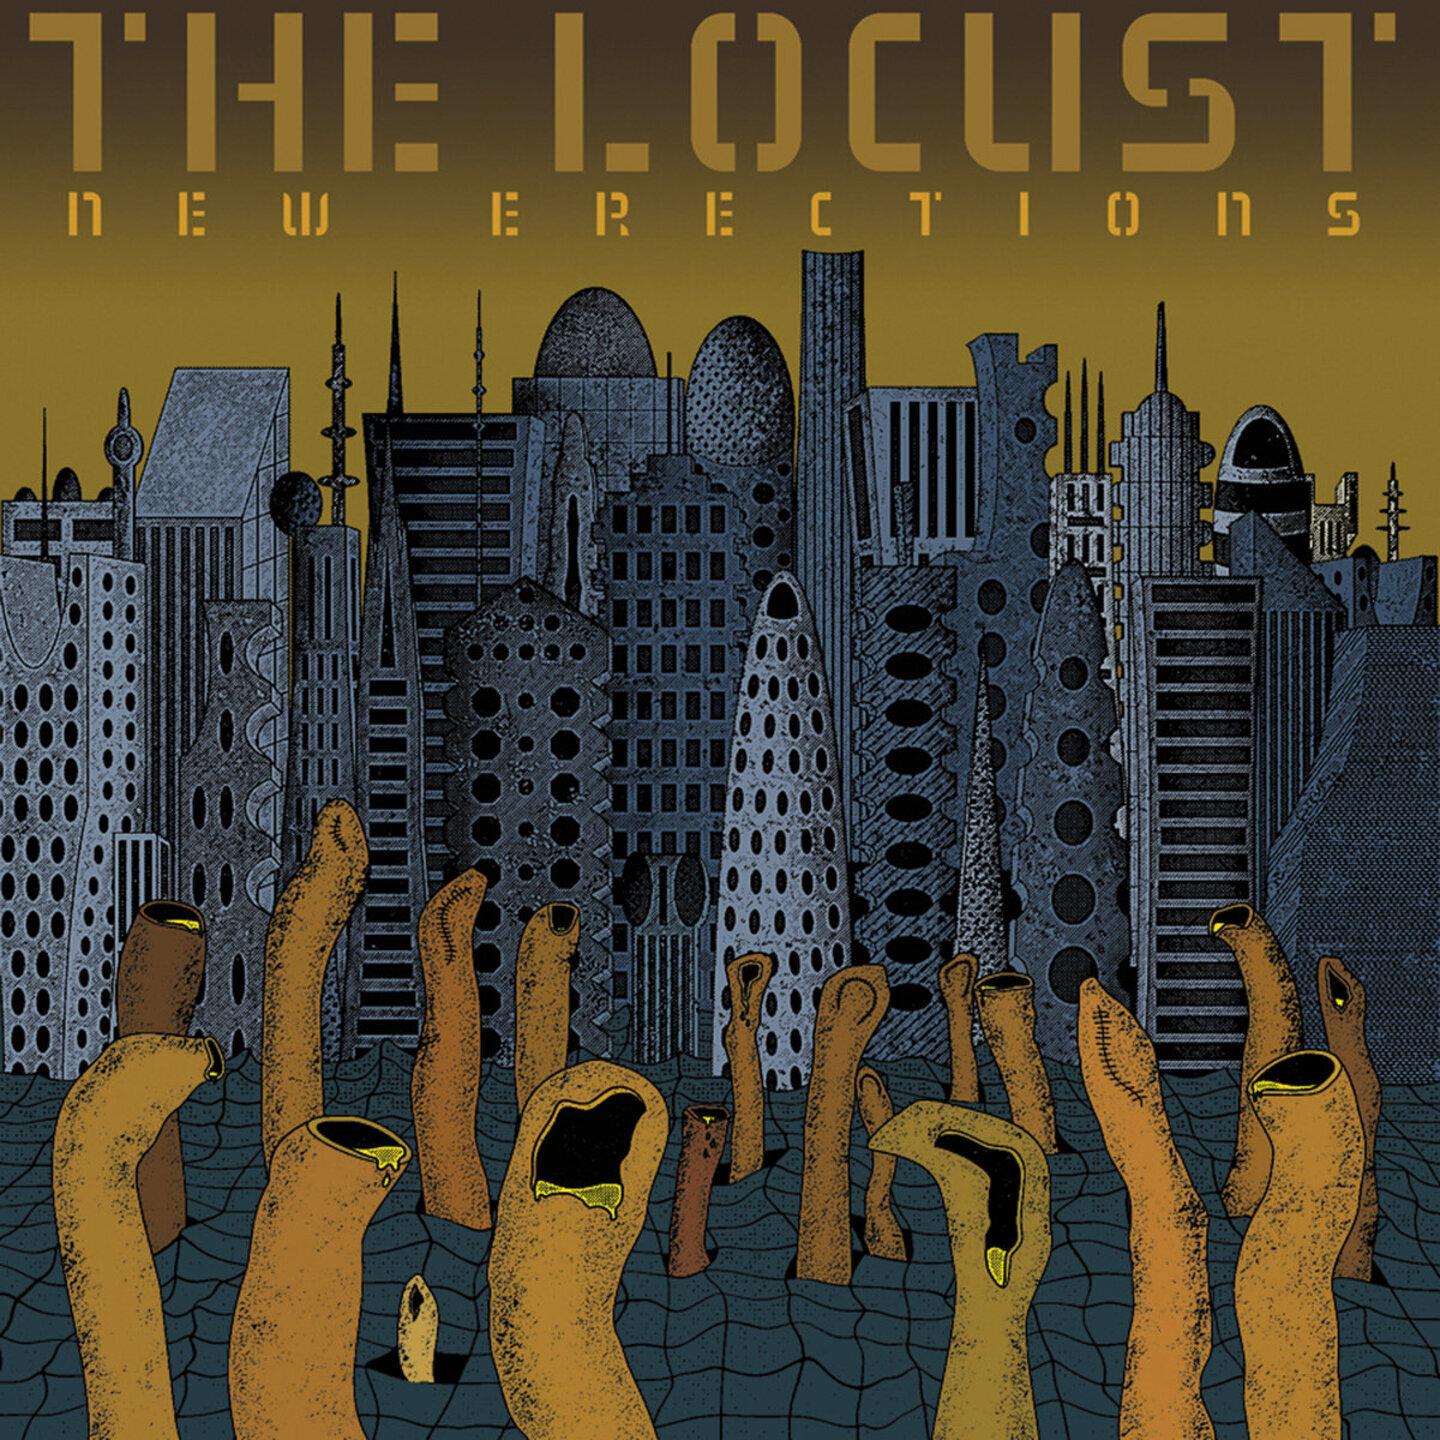 LOCUST, THE - New Erections LP (Trans Electric Blue vinyl)